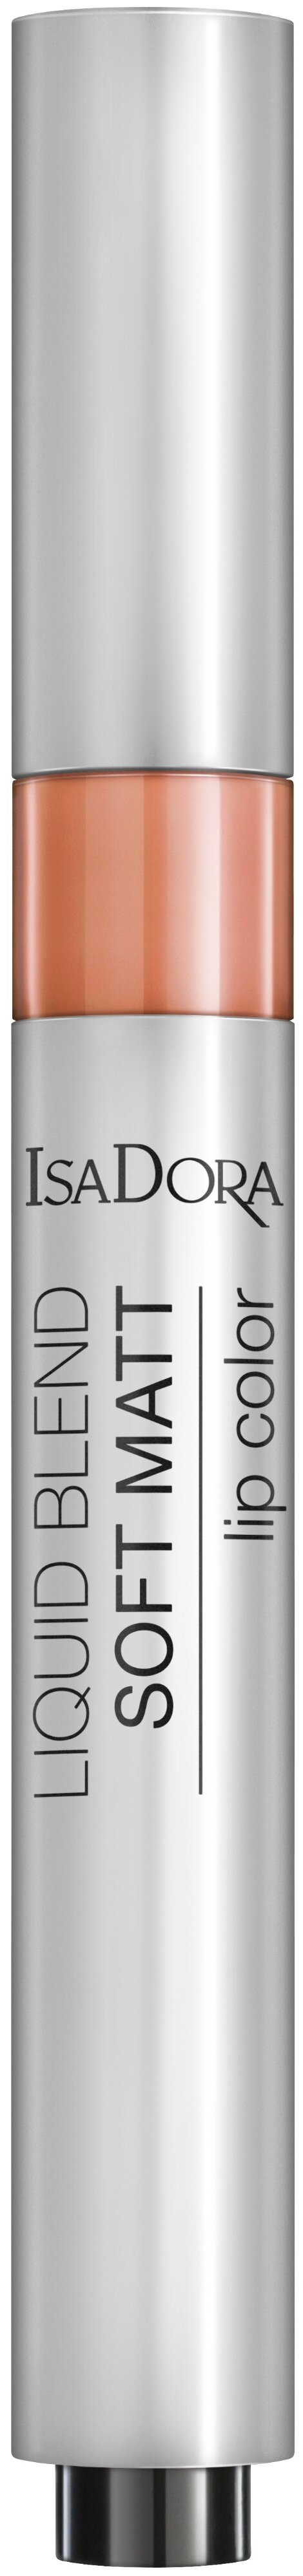 IsaDora жидкая помада для губ Liquid Blend Soft Matt Lip Color, оттенок 82 Candied Chestnut